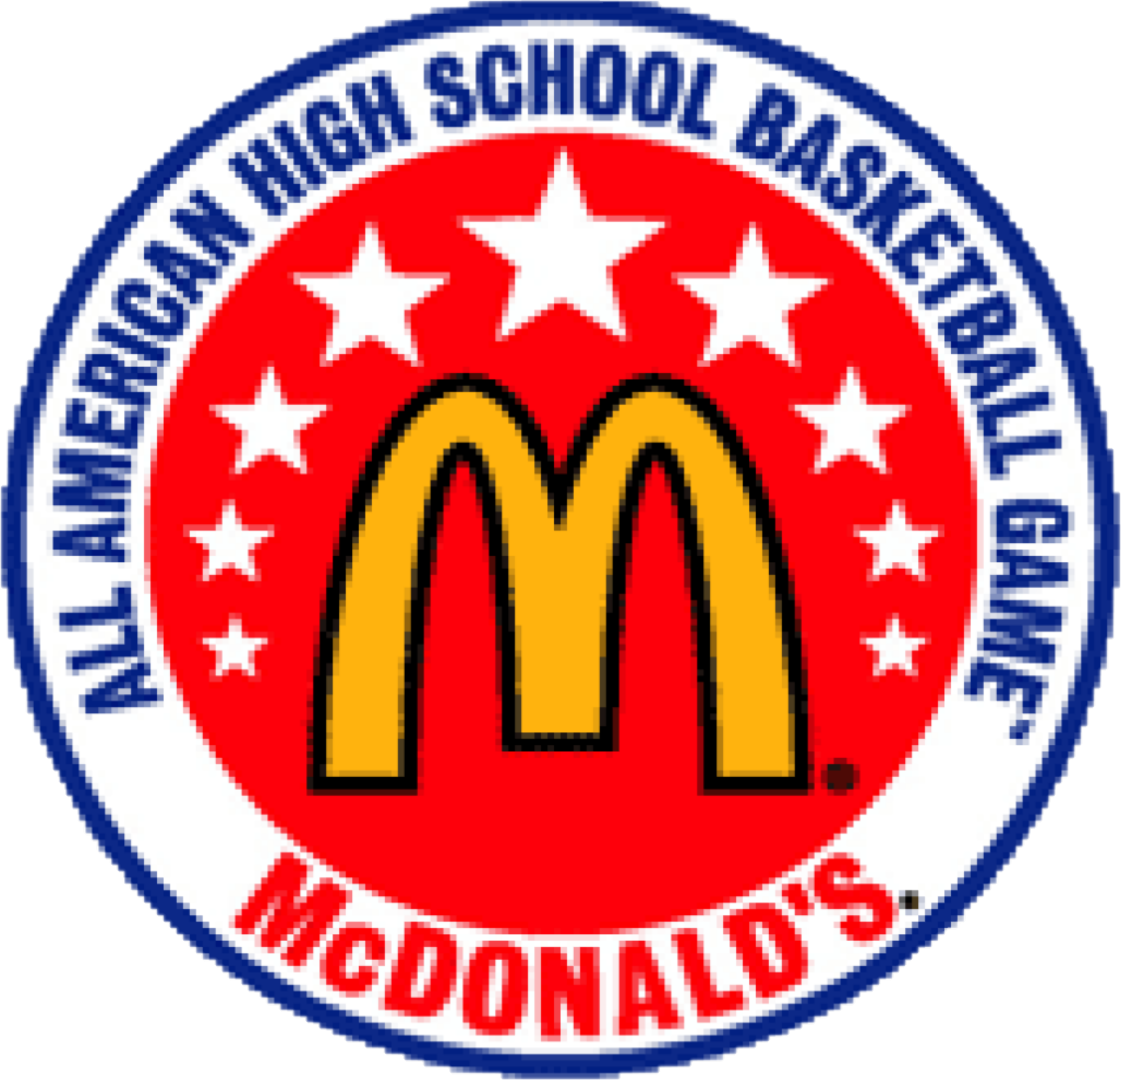 McDonald's All American Game logo (Old) by Blakeharris02 on DeviantArt